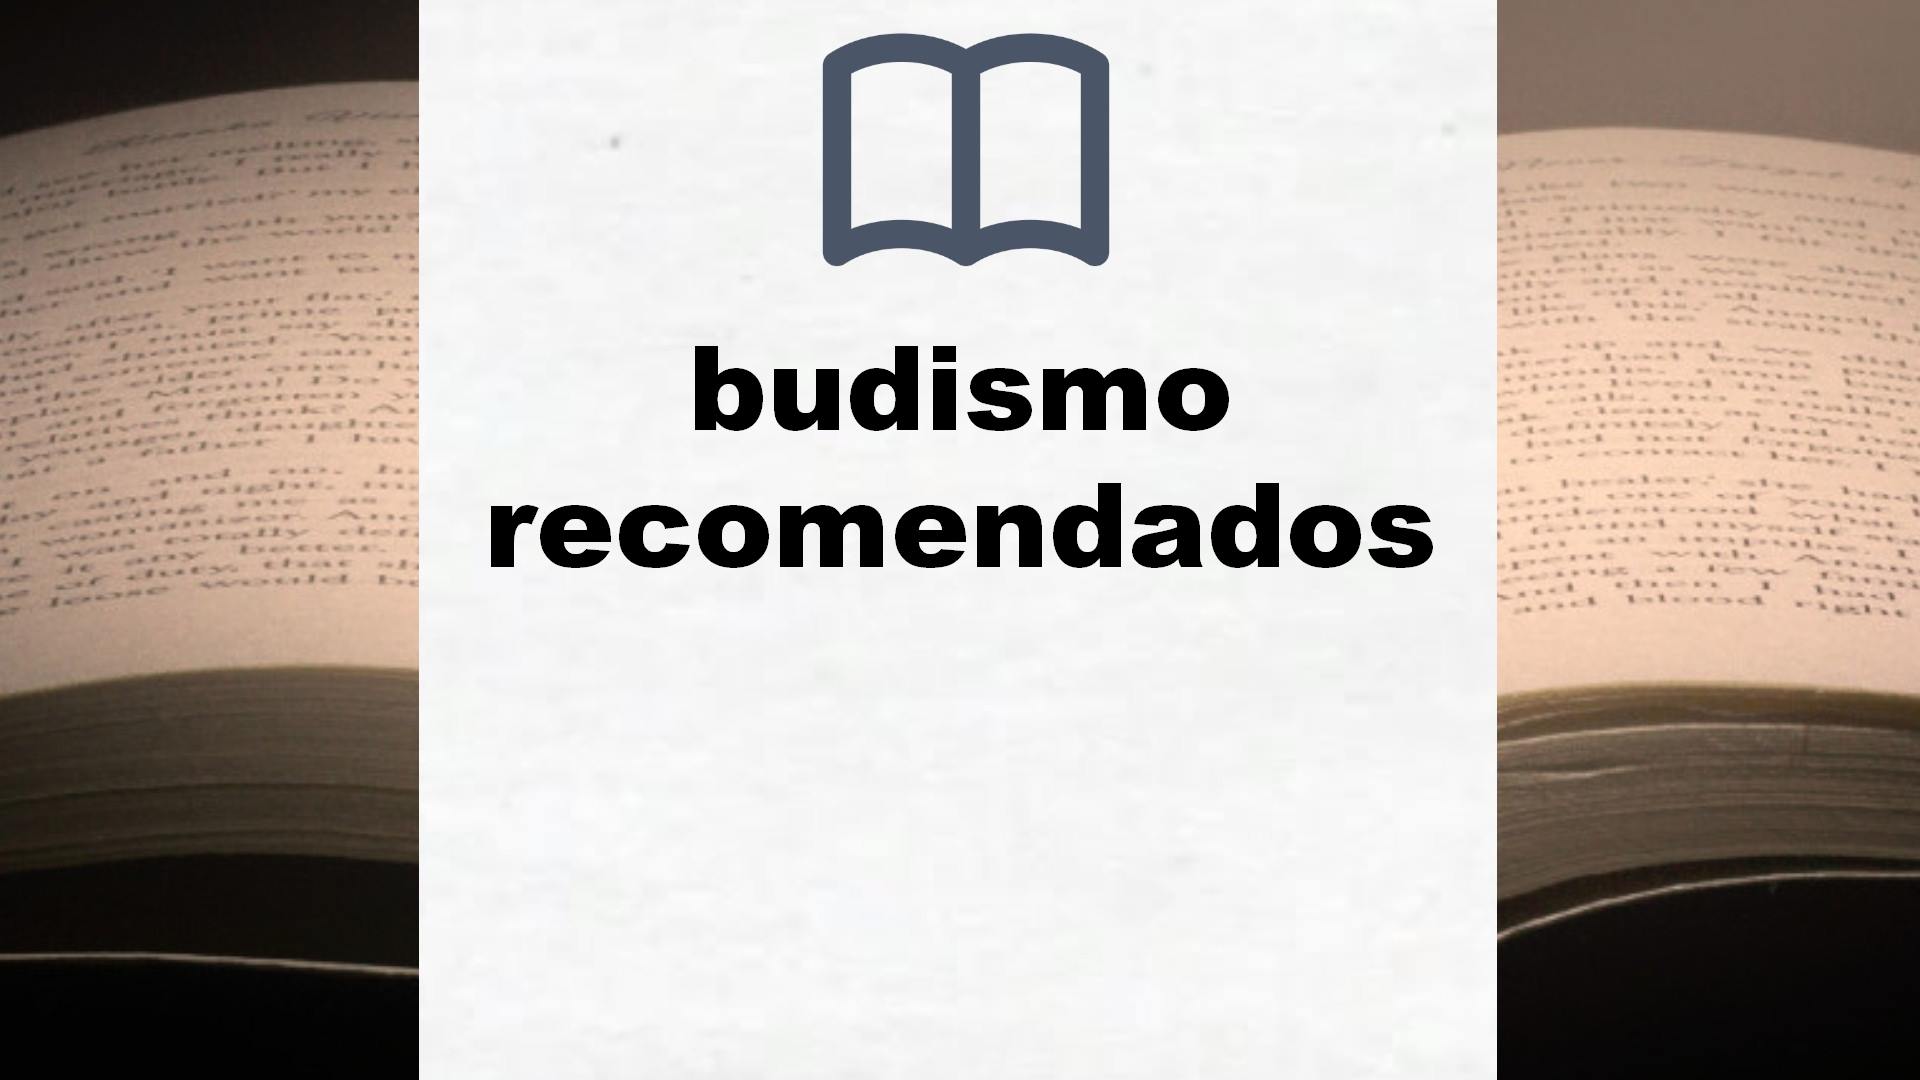 Libros sobre budismo recomendados